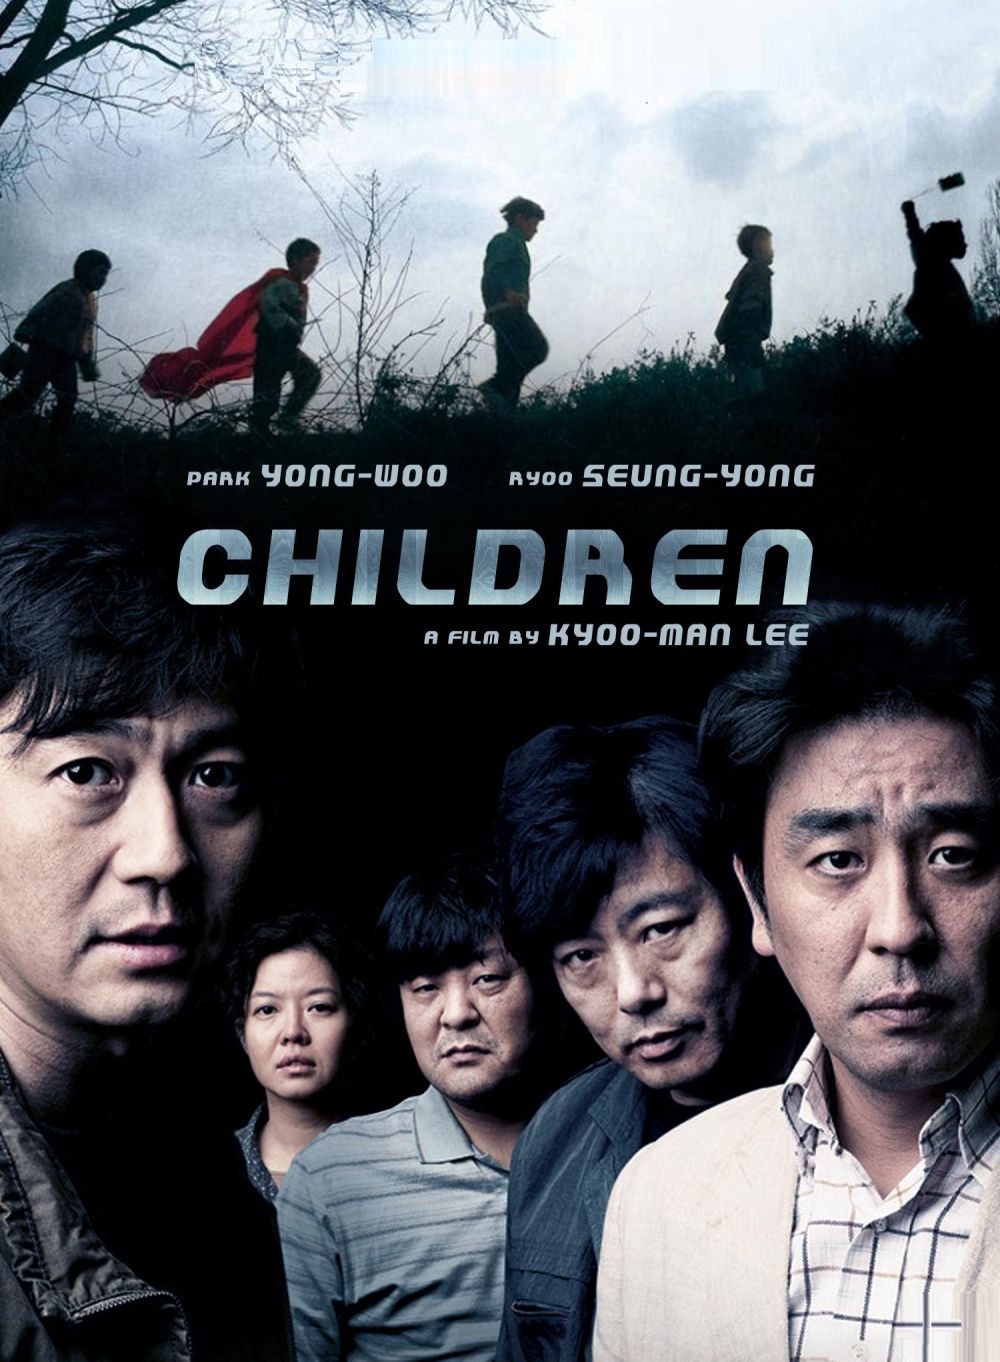 13 Film Korea detektif menegangkan, Mission: Possible dramatis banget